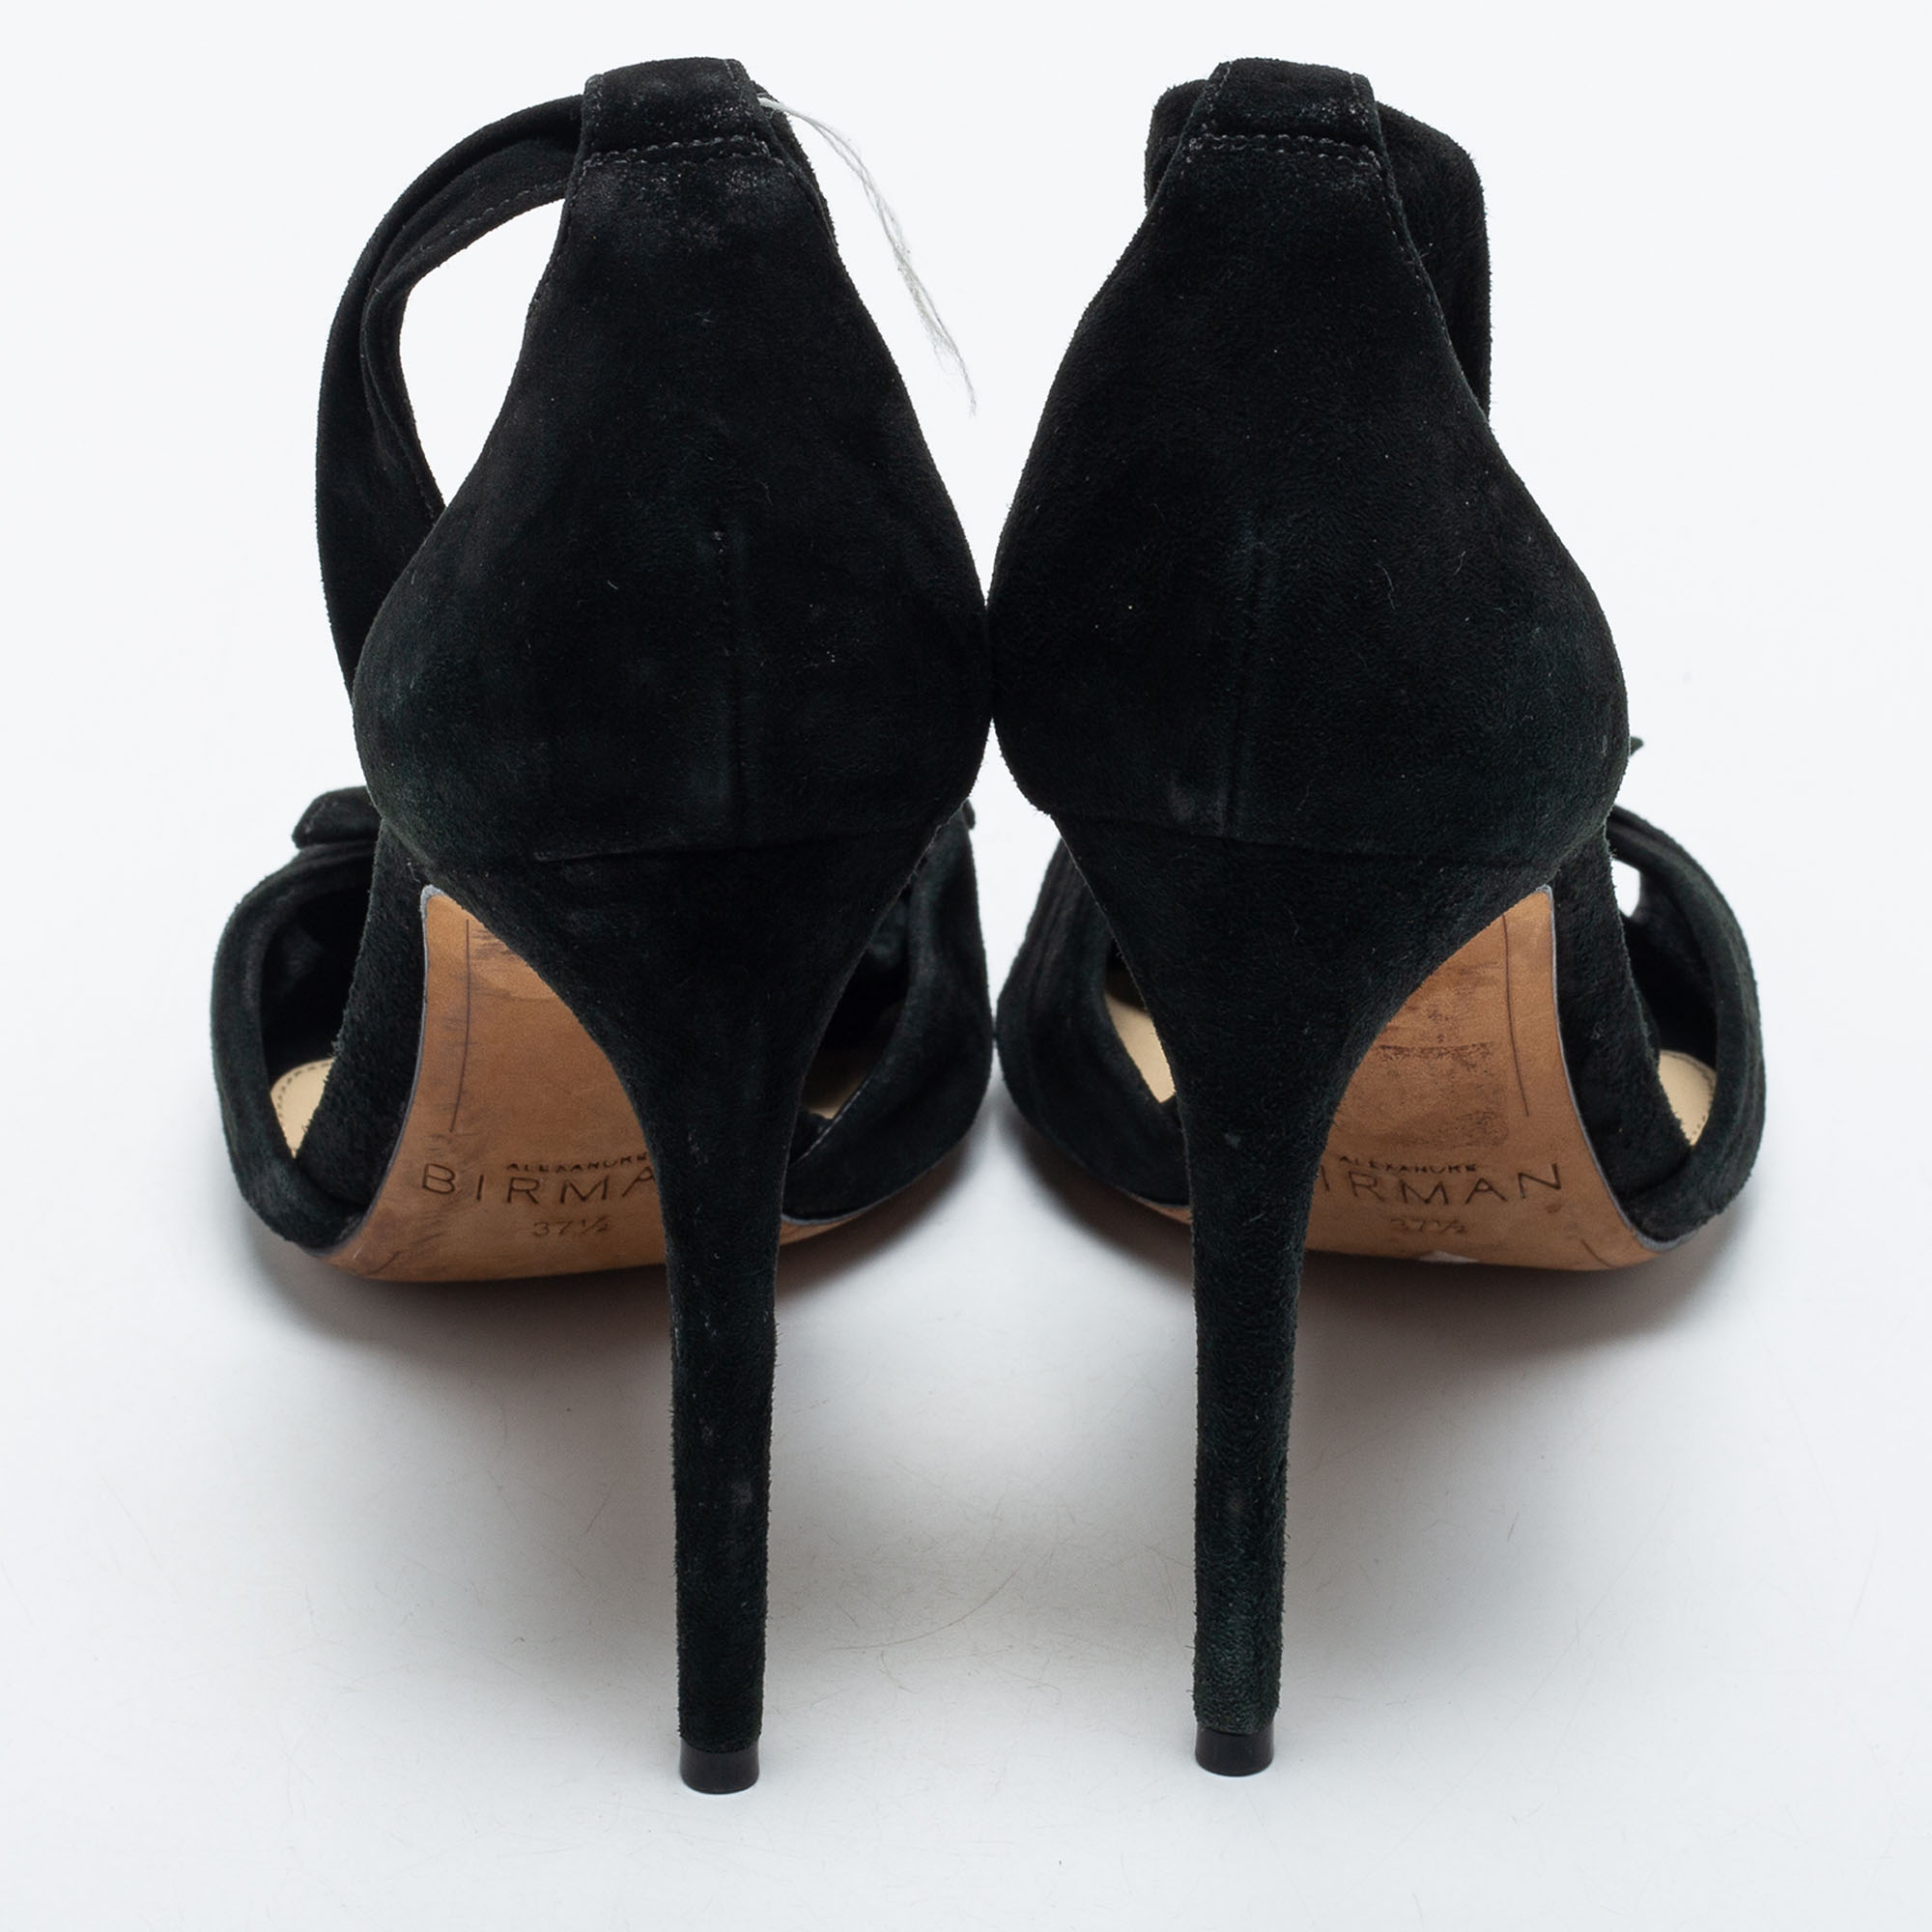 Alexandre Birman Black Suede Clarita Ankle Tie Sandals Size 37.5